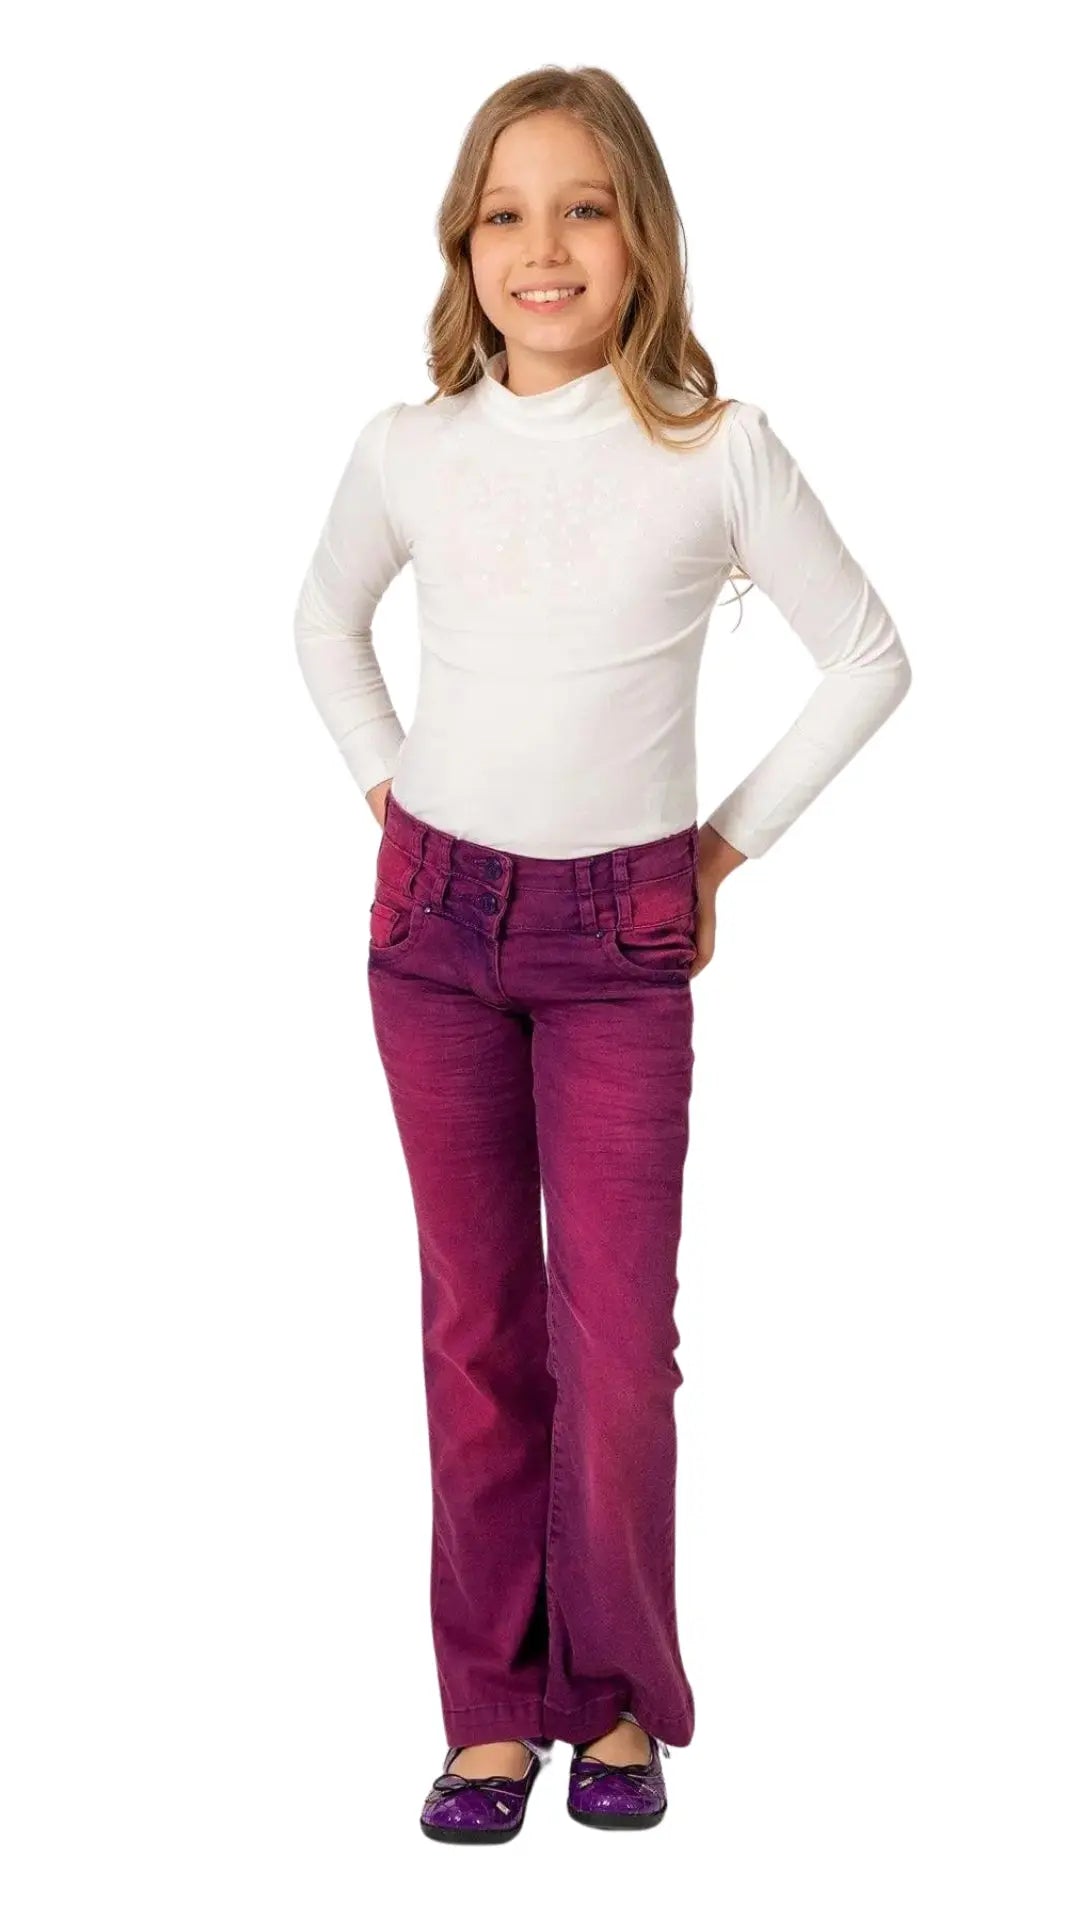 InCity Girls Tween 7-14 Years Green Purple Mid-Rise Regular Fit Cotton